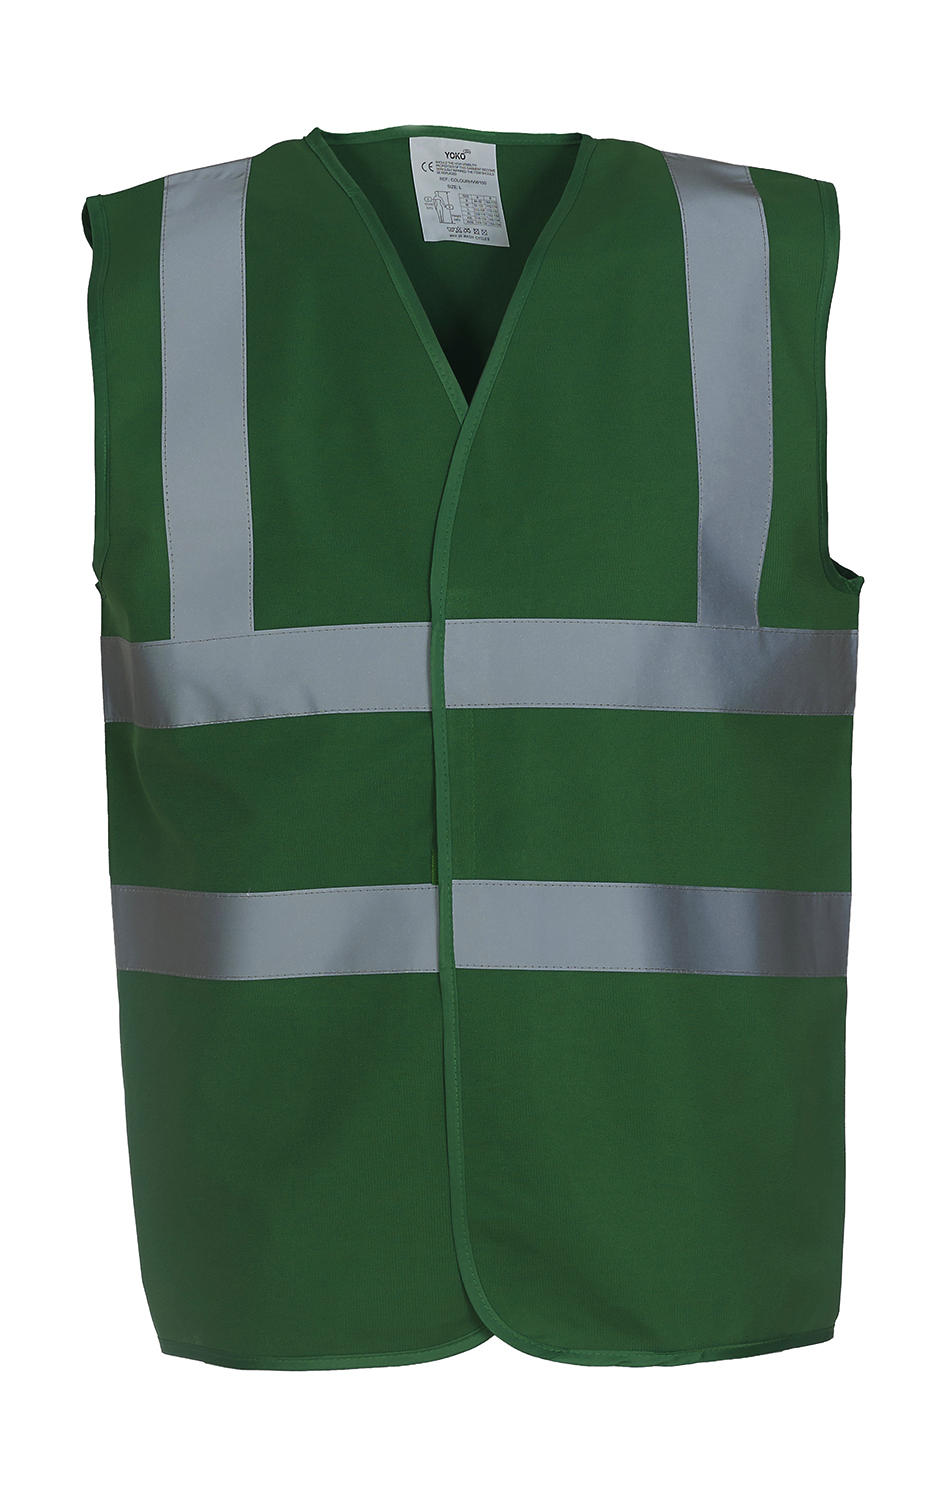 Bezpečnostná vesta s reflexnými popruhmi - paramedic green